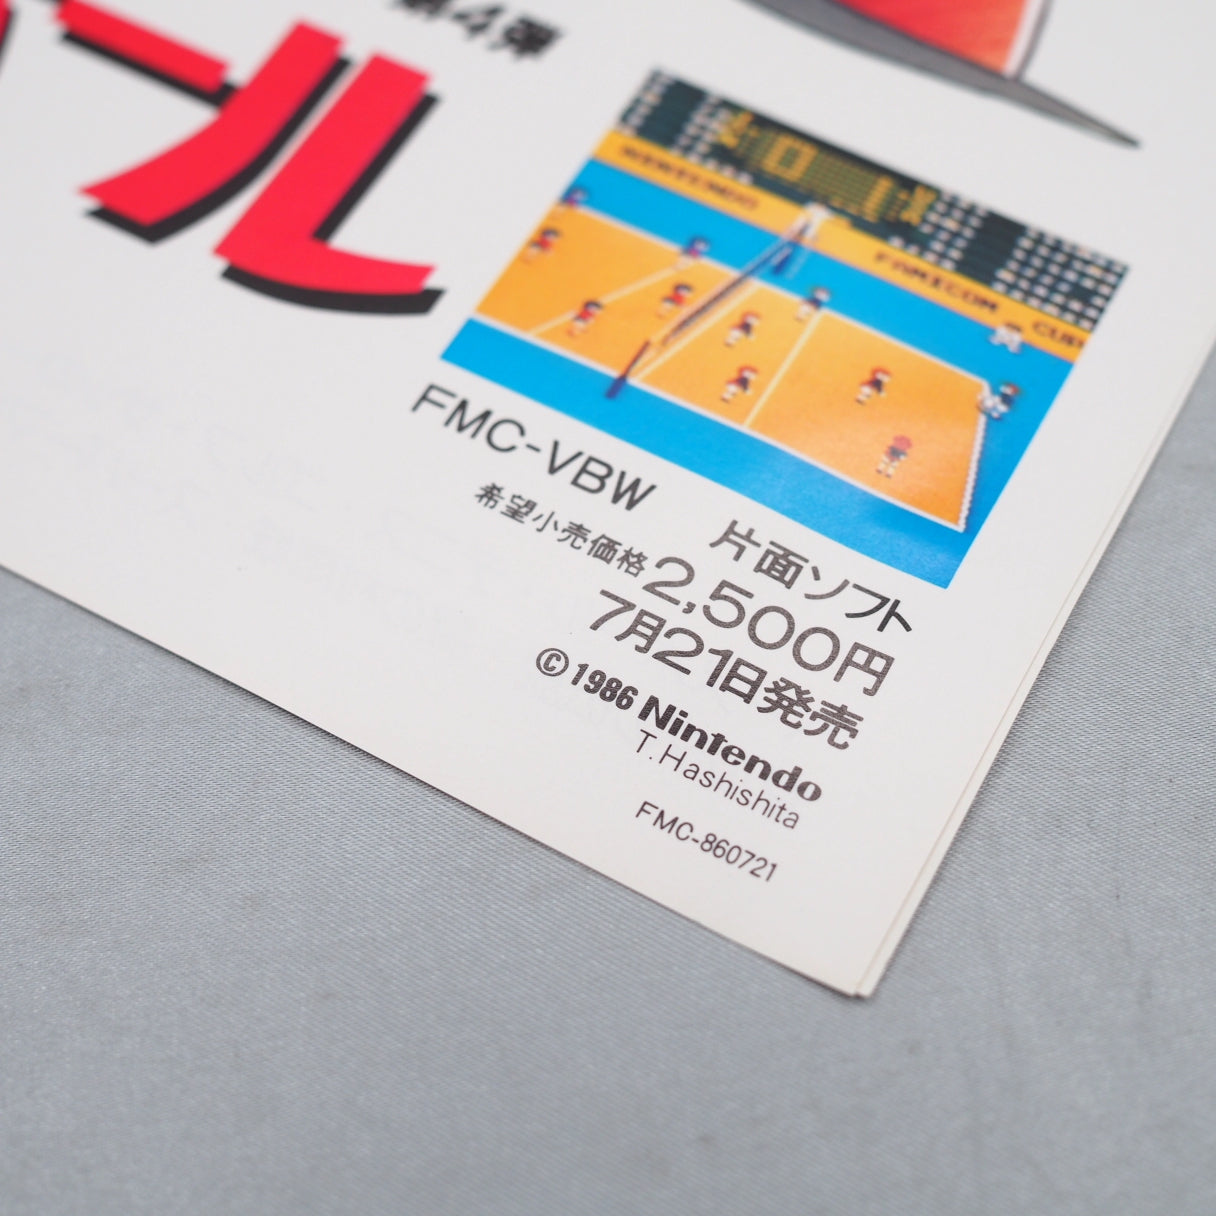 VOLLEYBALL Nintendo Famicom disk Catalog Flyer Leaflet Paper Poster